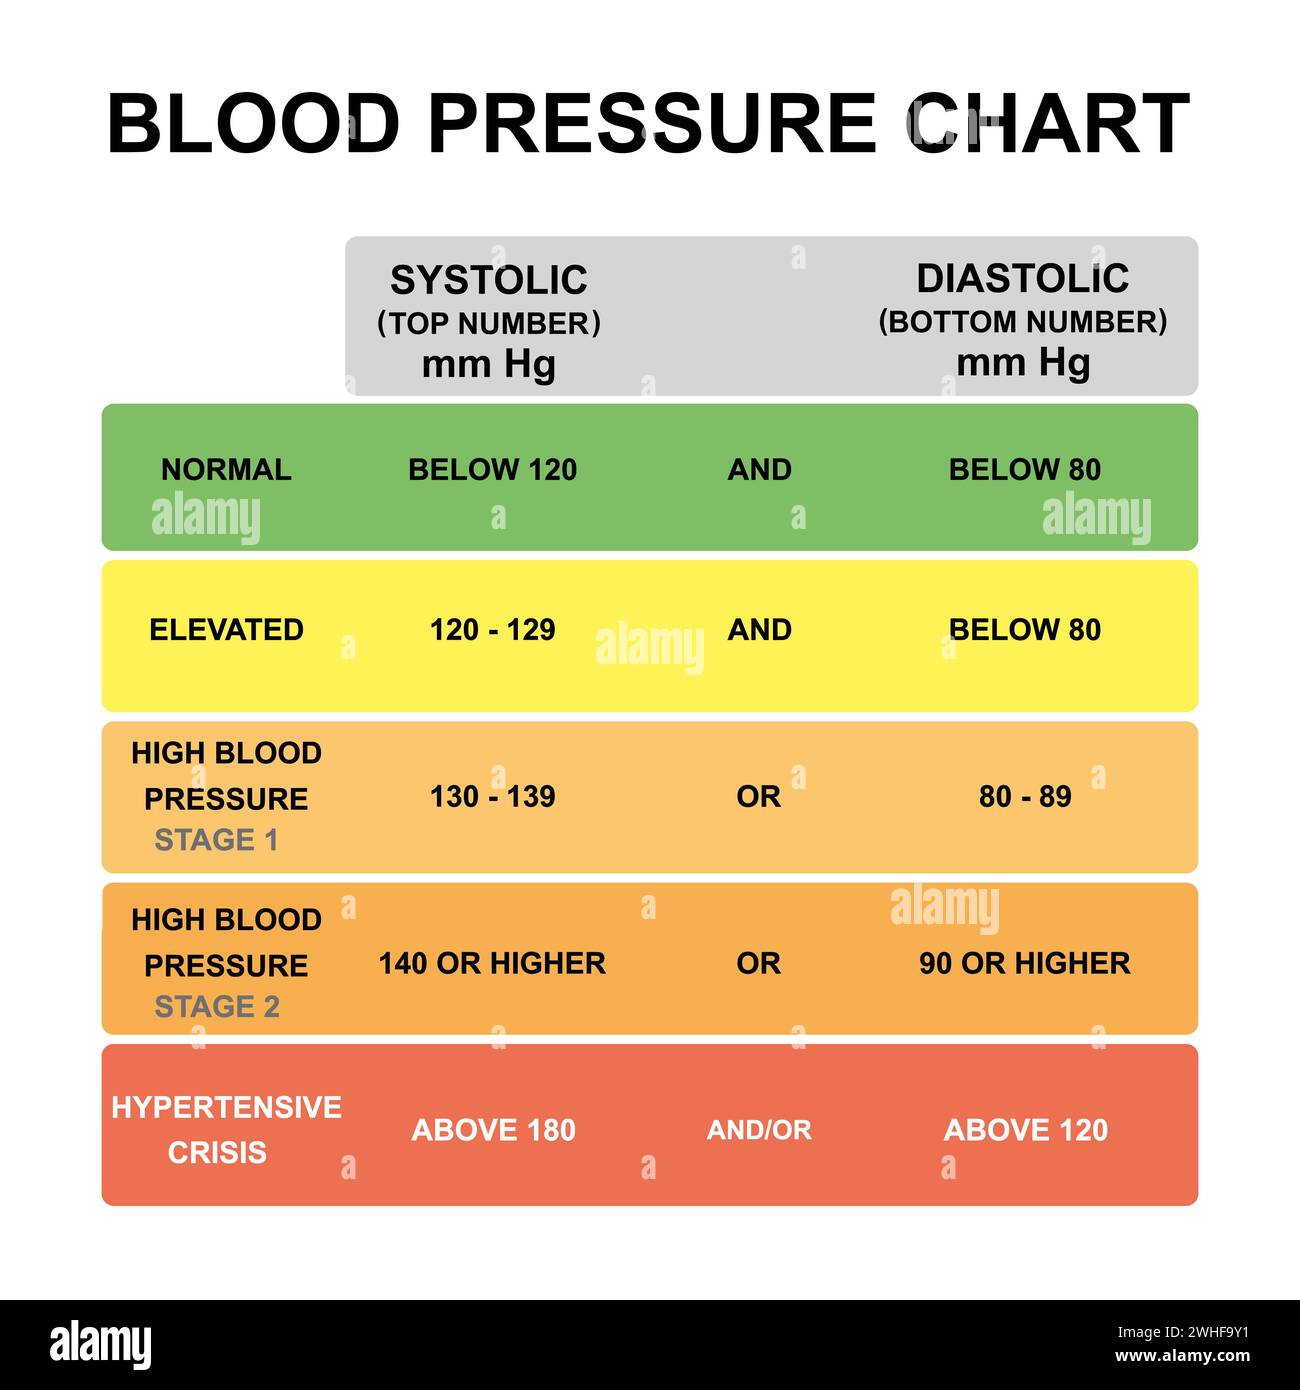 Blood pressure chart, illustration Stock Photo